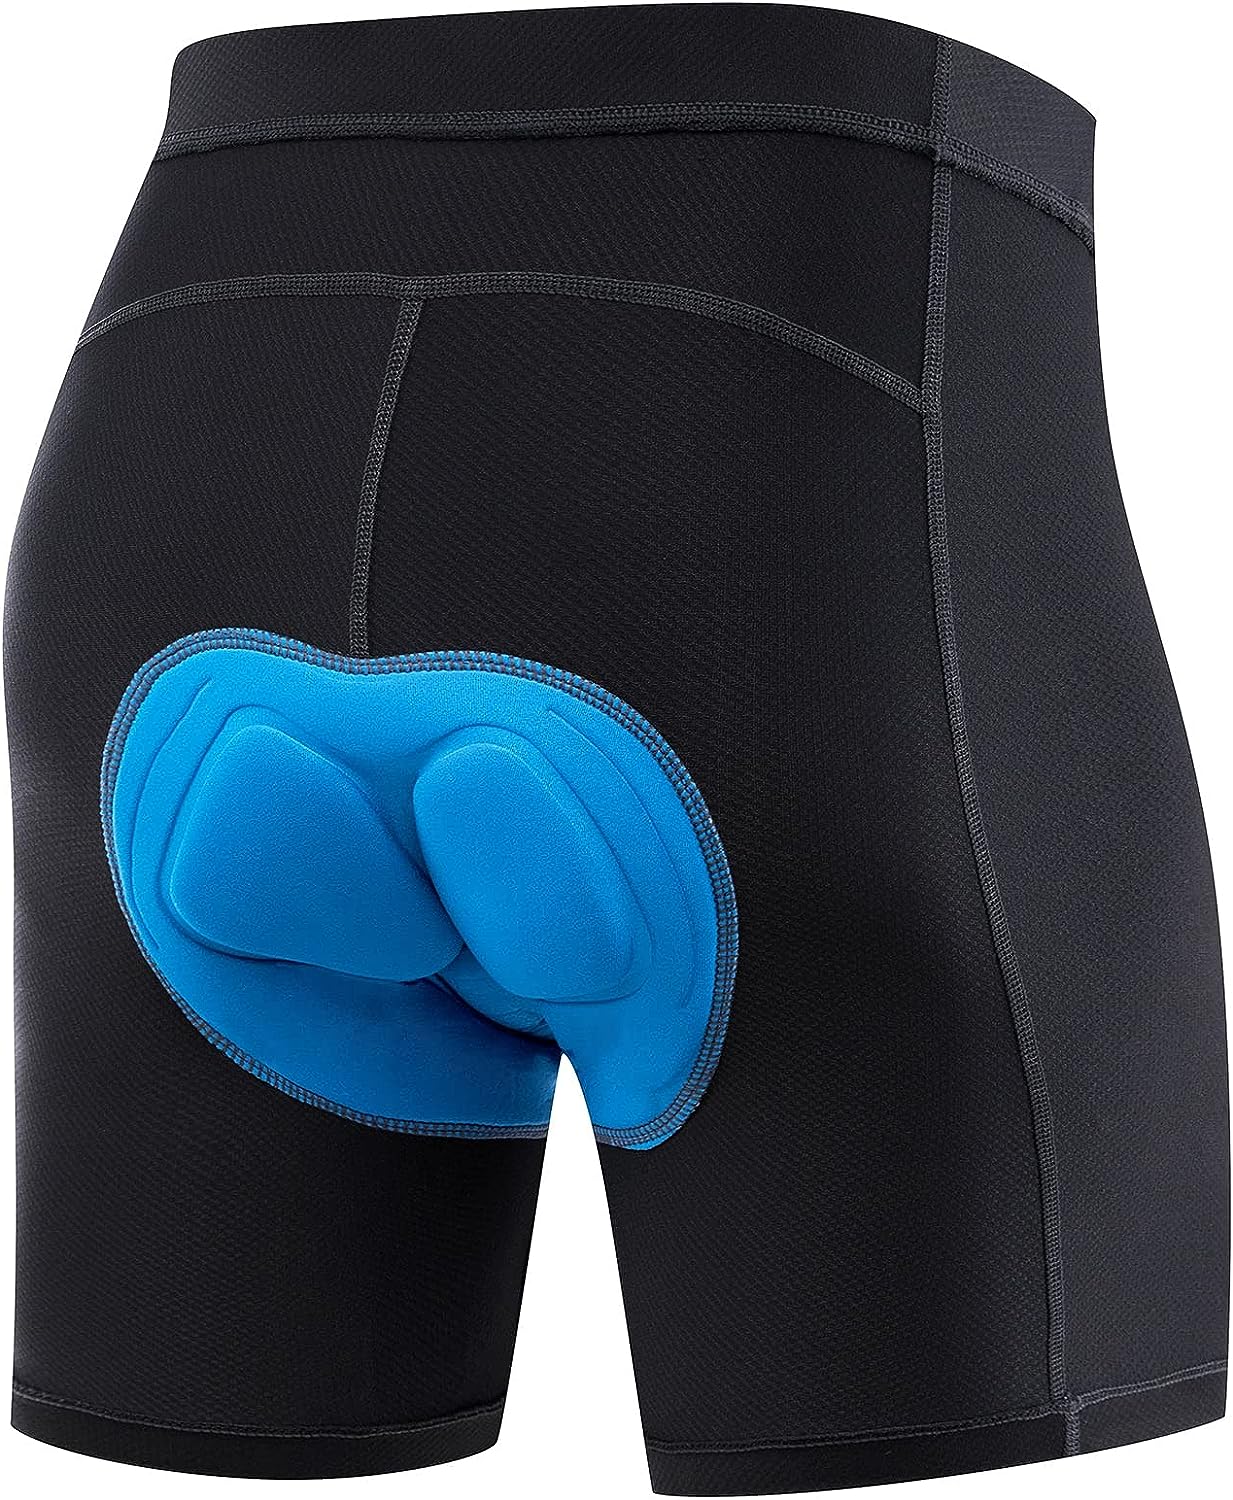 BALEAF Gel Padding & 3D Cushion Men's Underwear Bicycle Shorts, 4.7-Inch